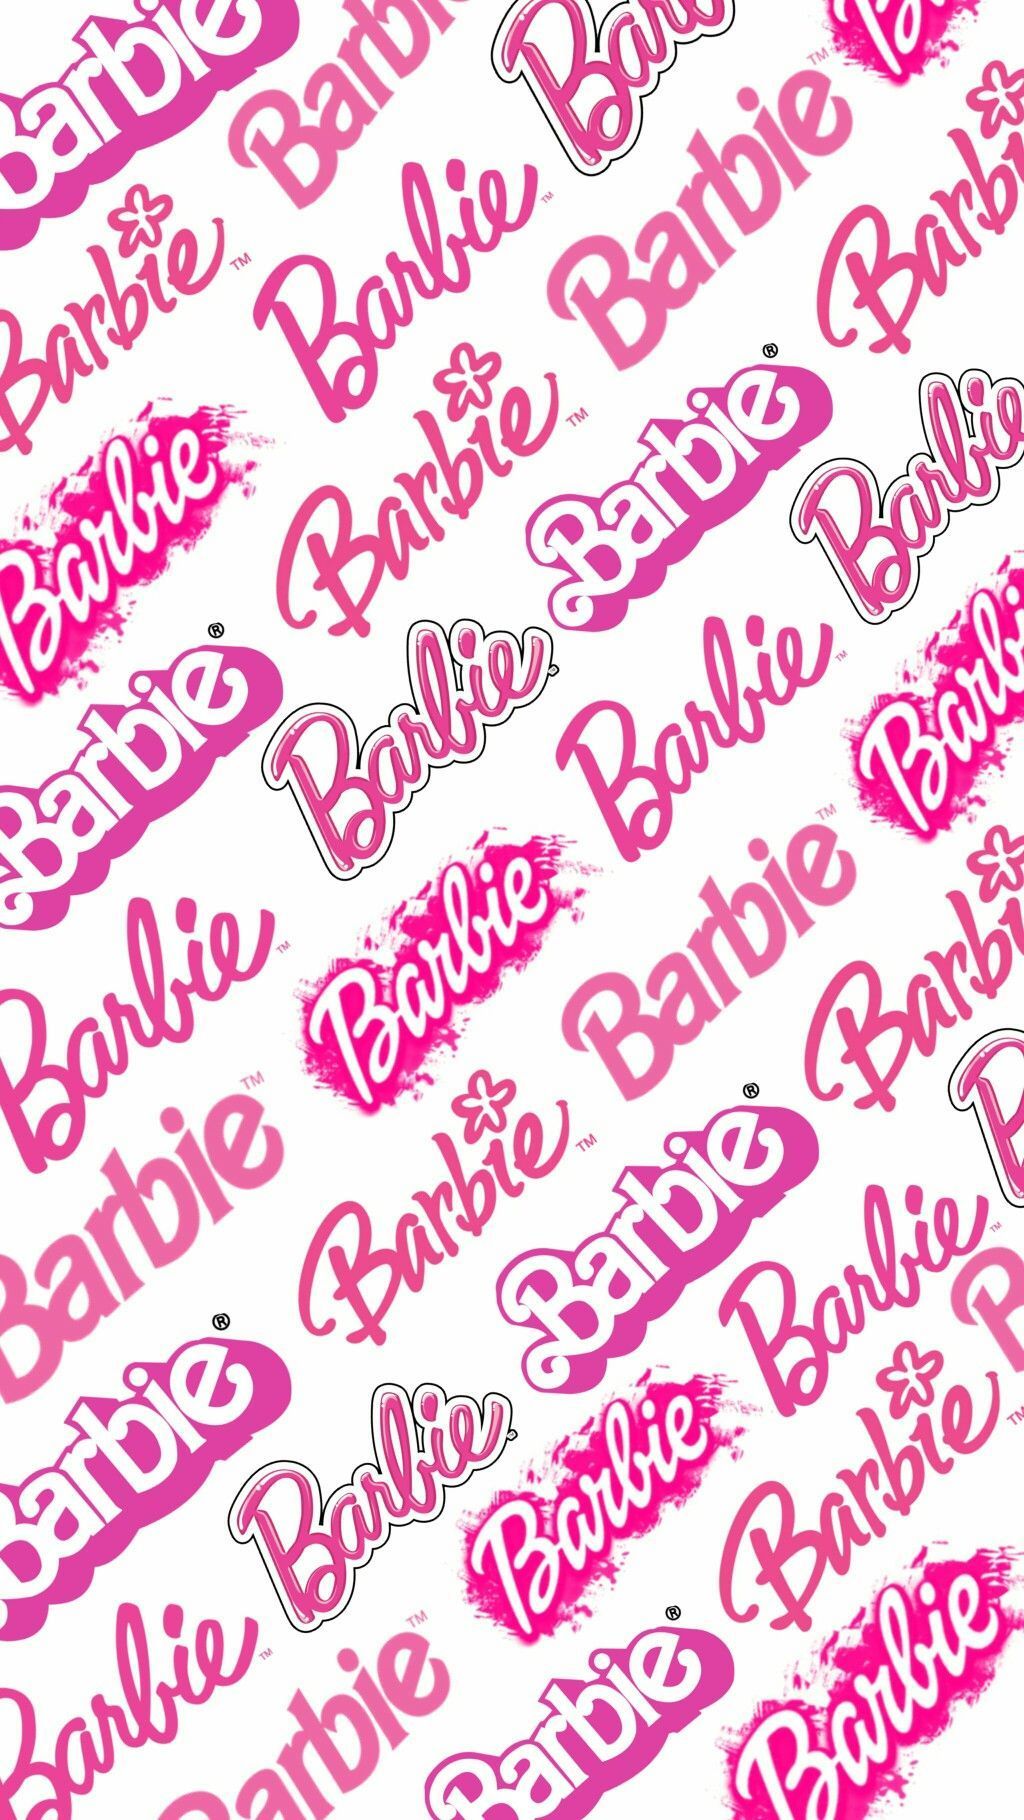 Barbie Aesthetic Wallpaper Free Barbie Aesthetic Background